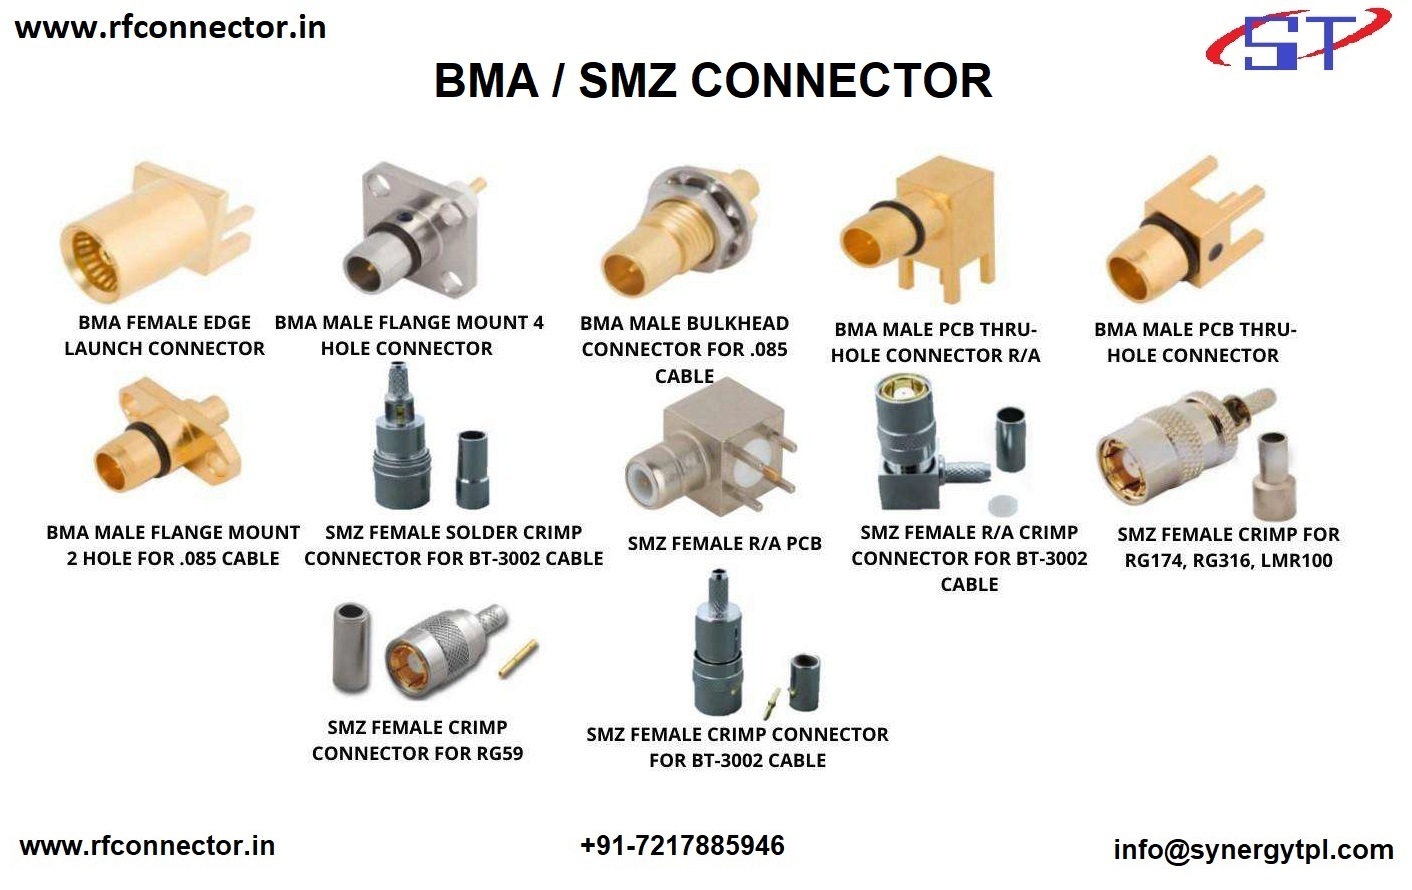 SMA MALE RIGHT ANGLE FOR LMR 200 CRIMP CONNECTOR